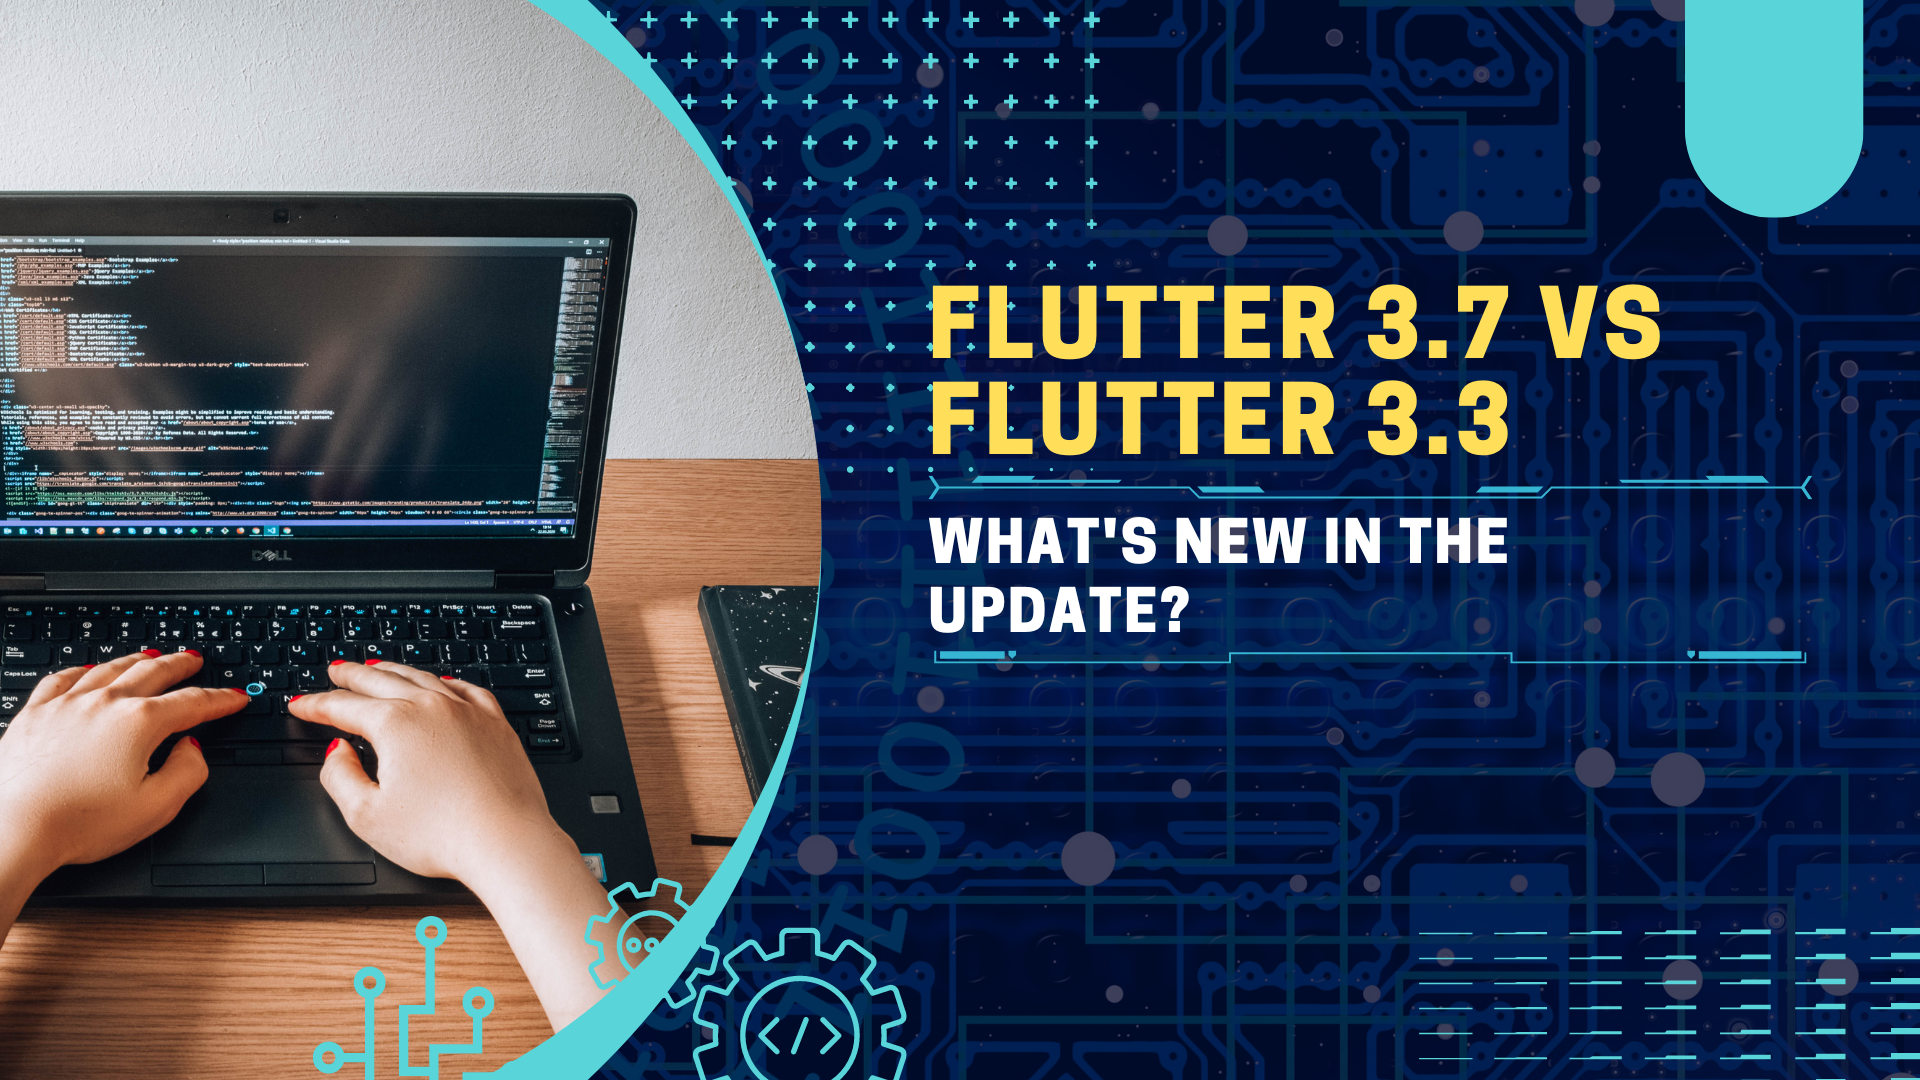 Flutter 3.7 vs Flutter 3.3: What’s New in the Update?